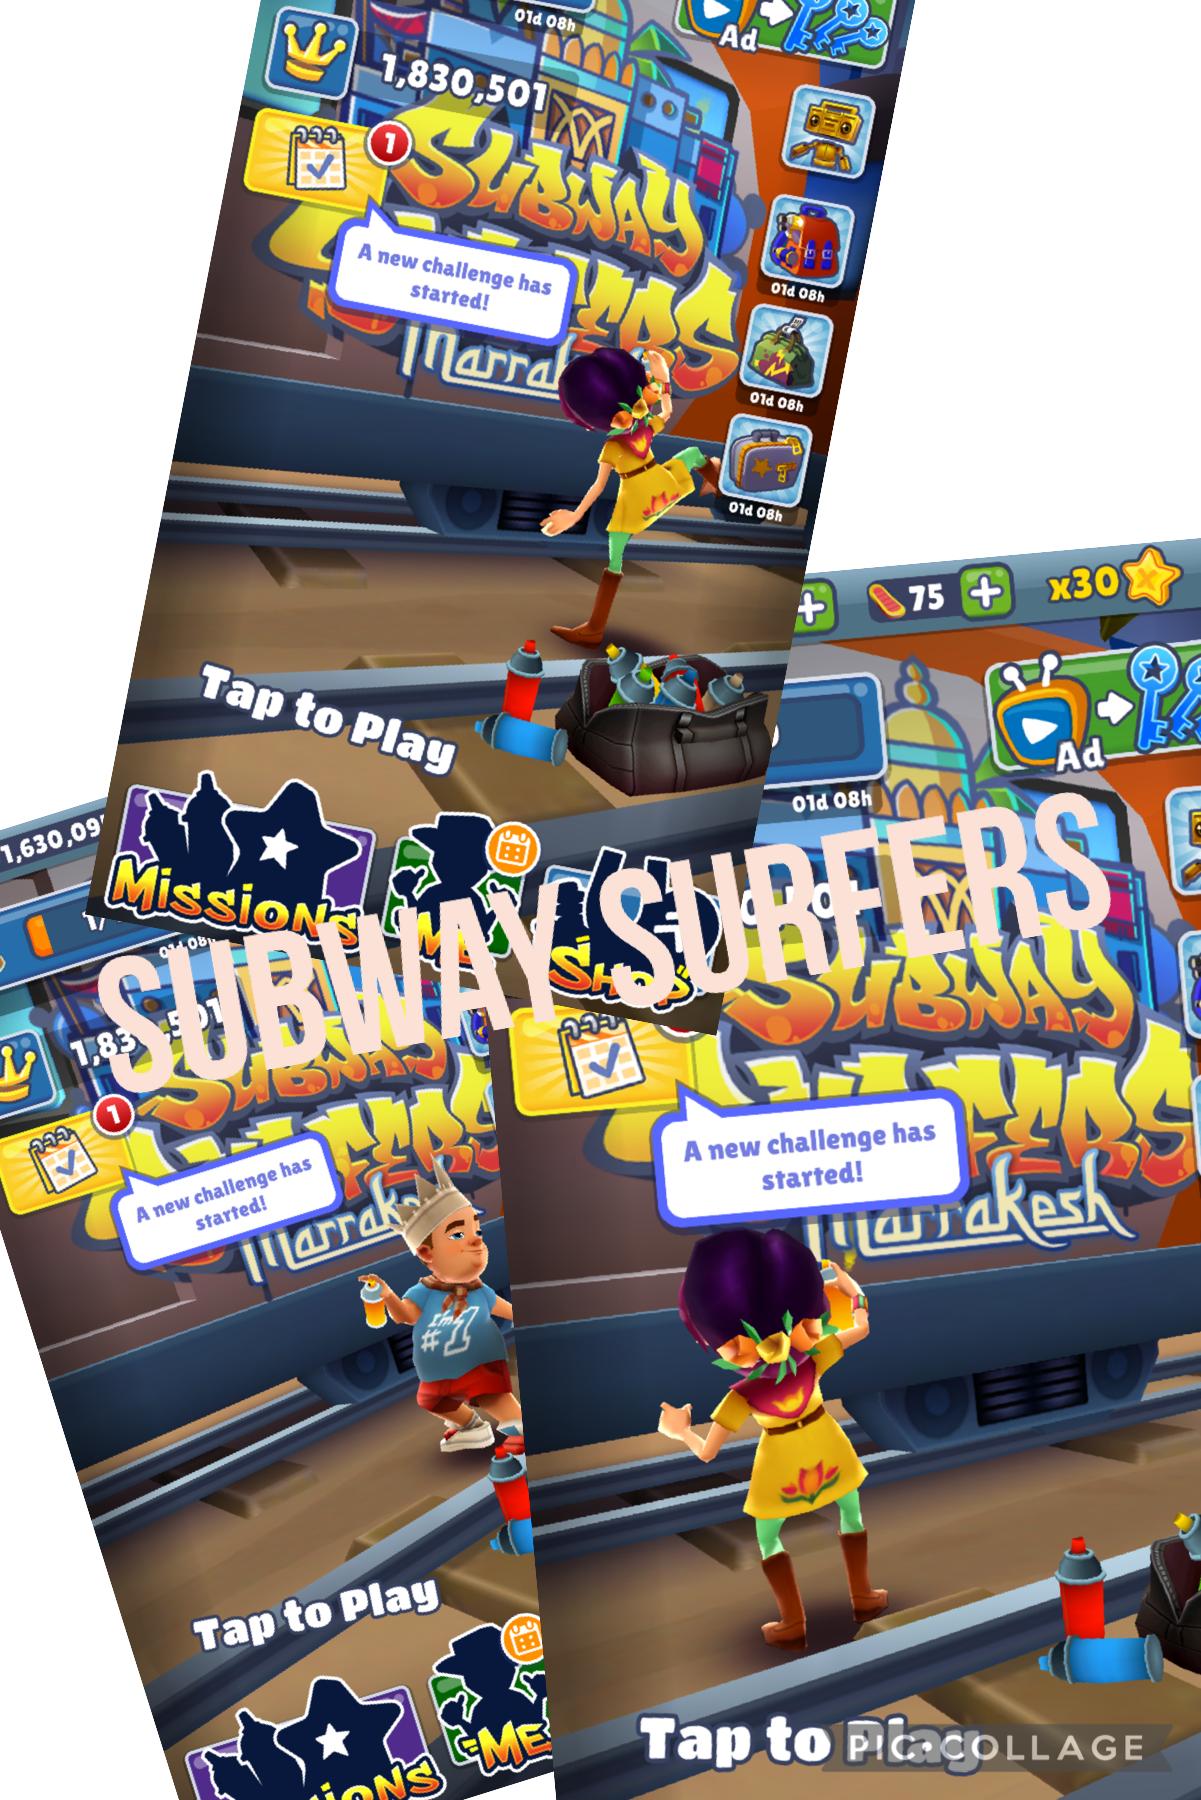 Subway surfer player✌🏻